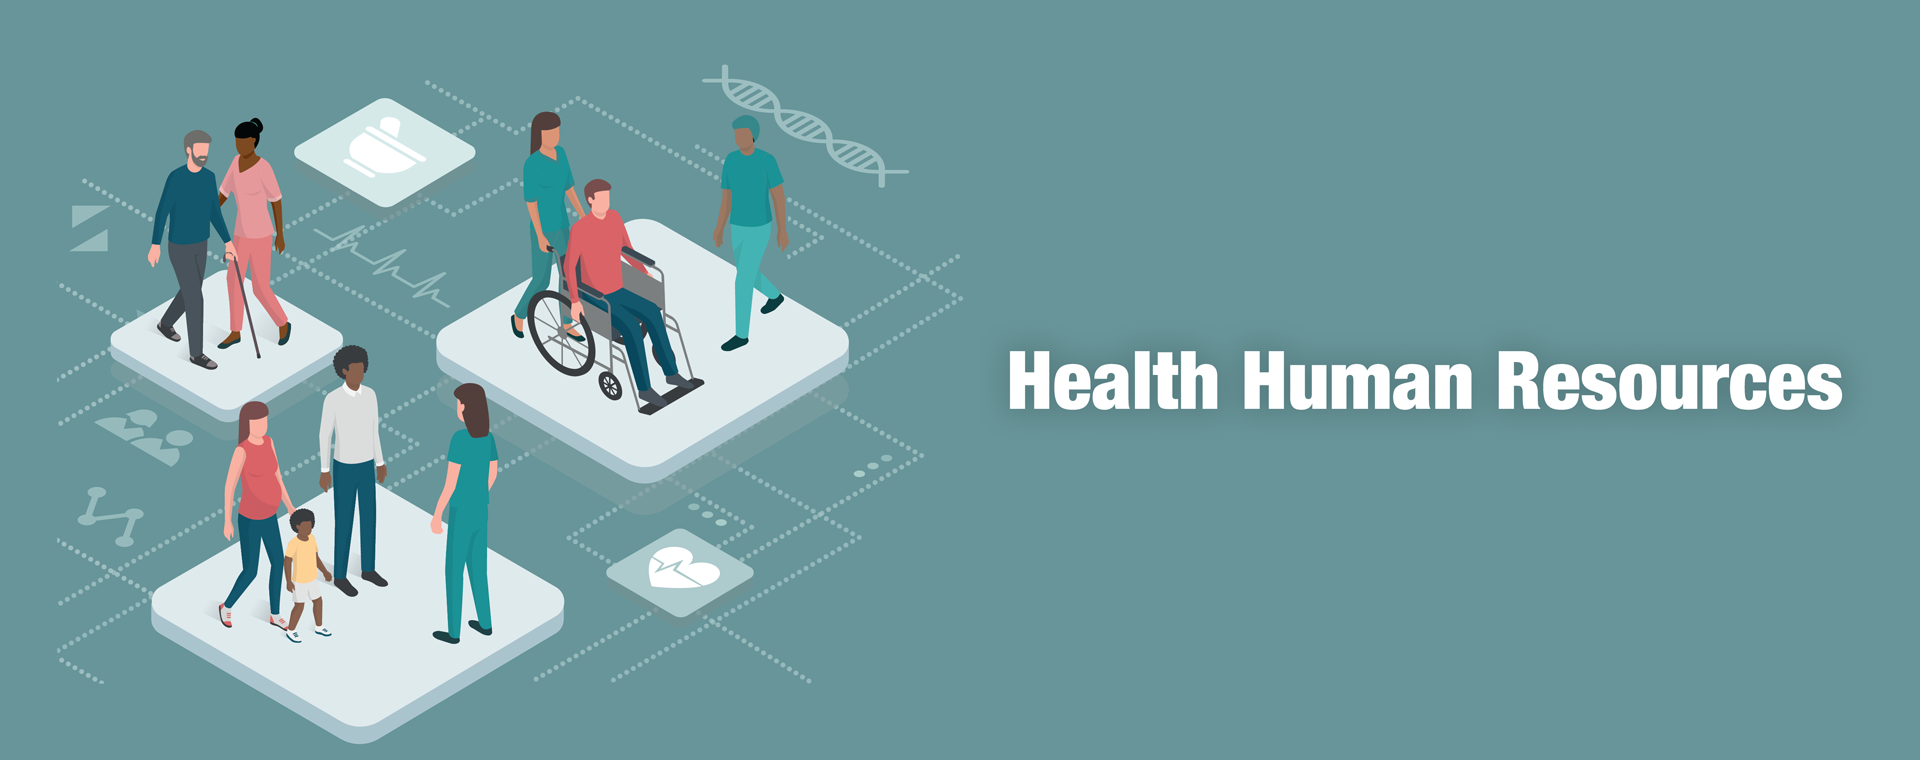 Health Human Resources